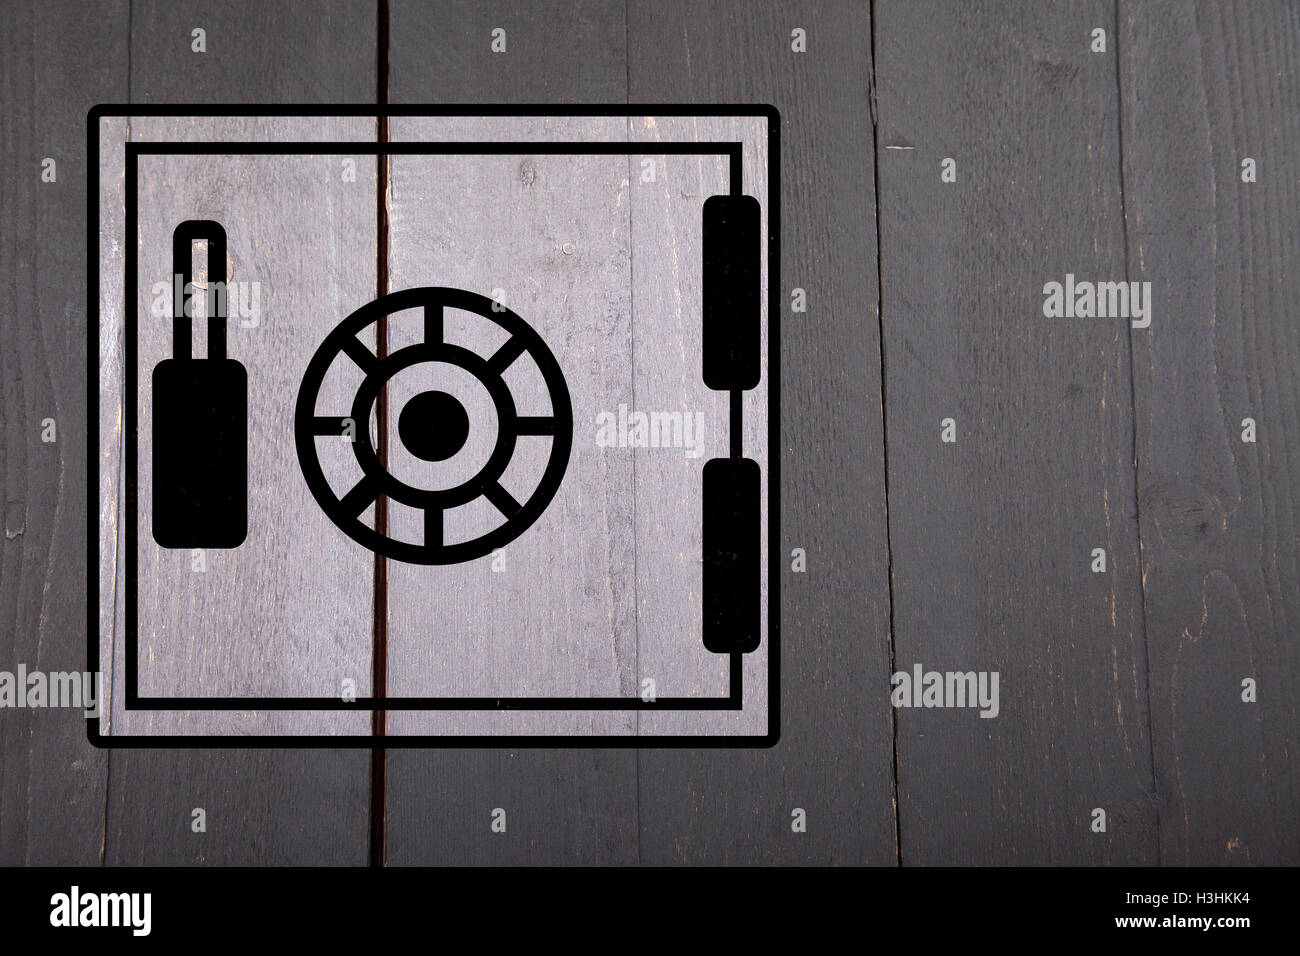 Illustration of a safe on black wooden background Stock Photo